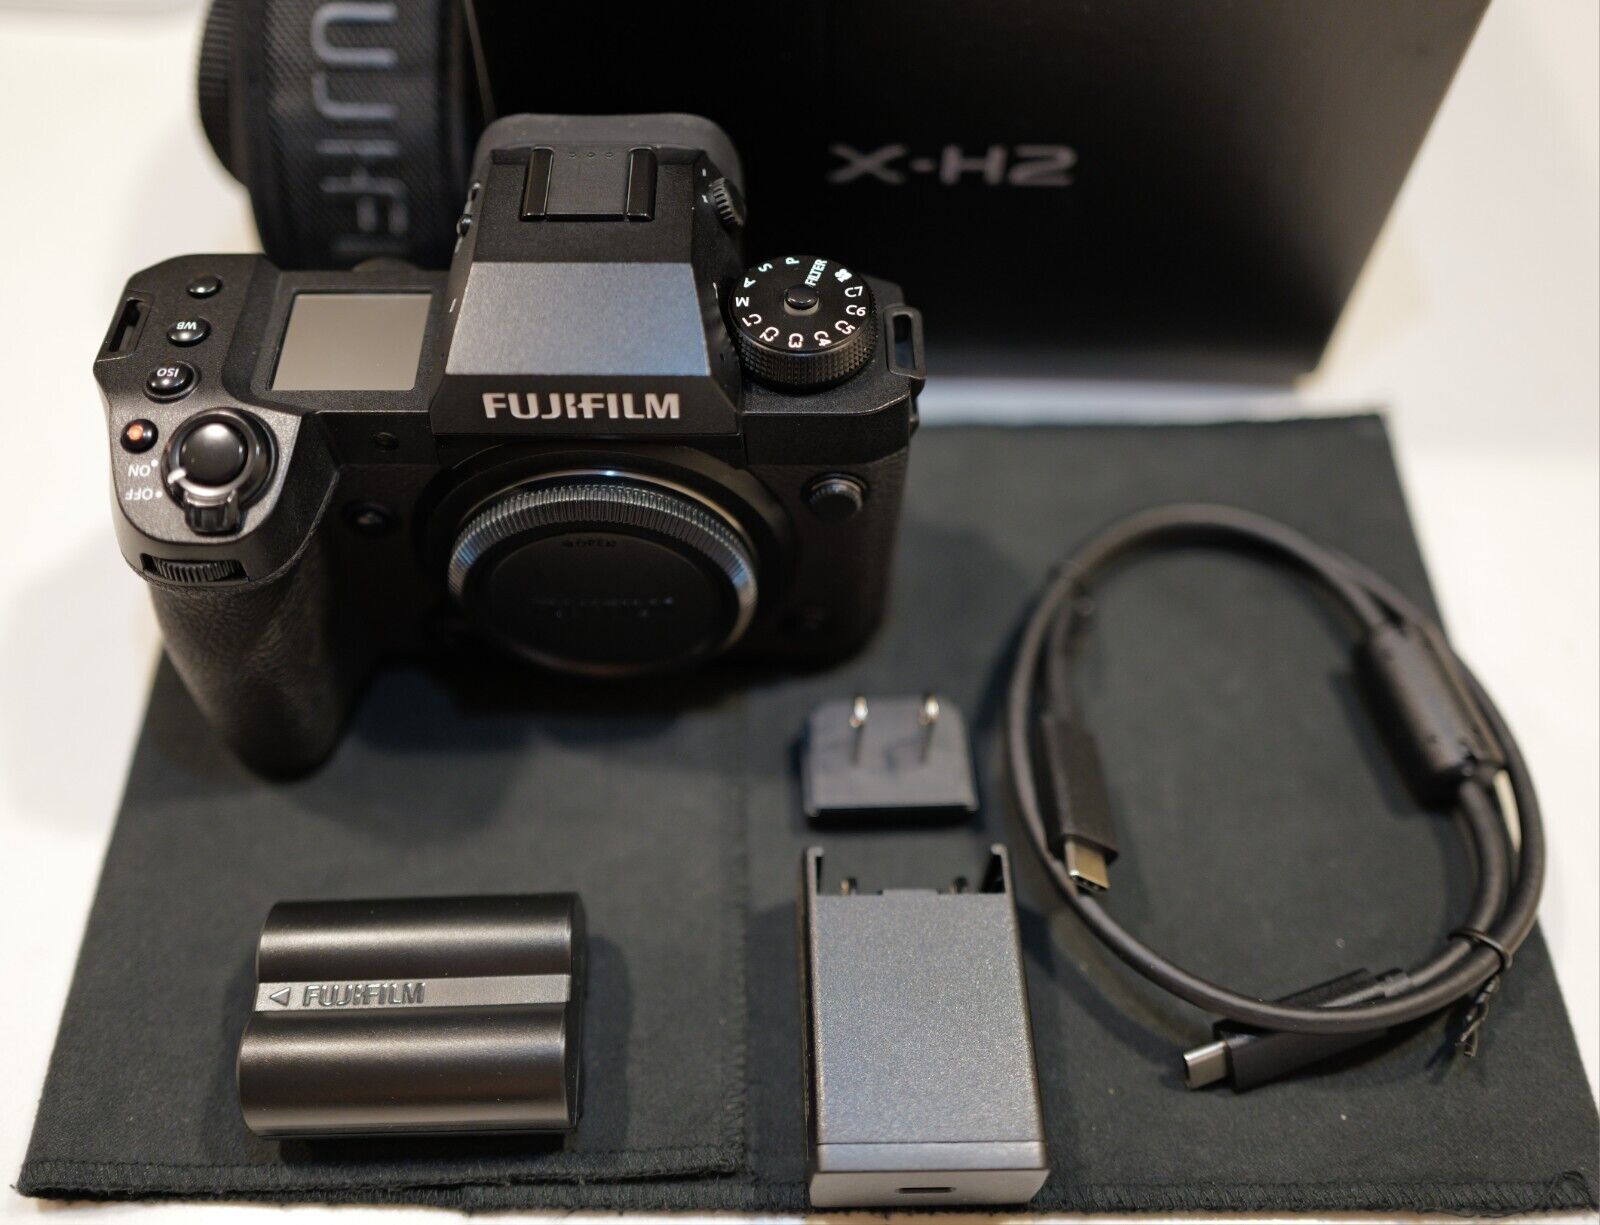 Fujifilm X-H2 40.0MP Mirrorless Camera - Black (Body Only) - FREE FAST SHIPPING